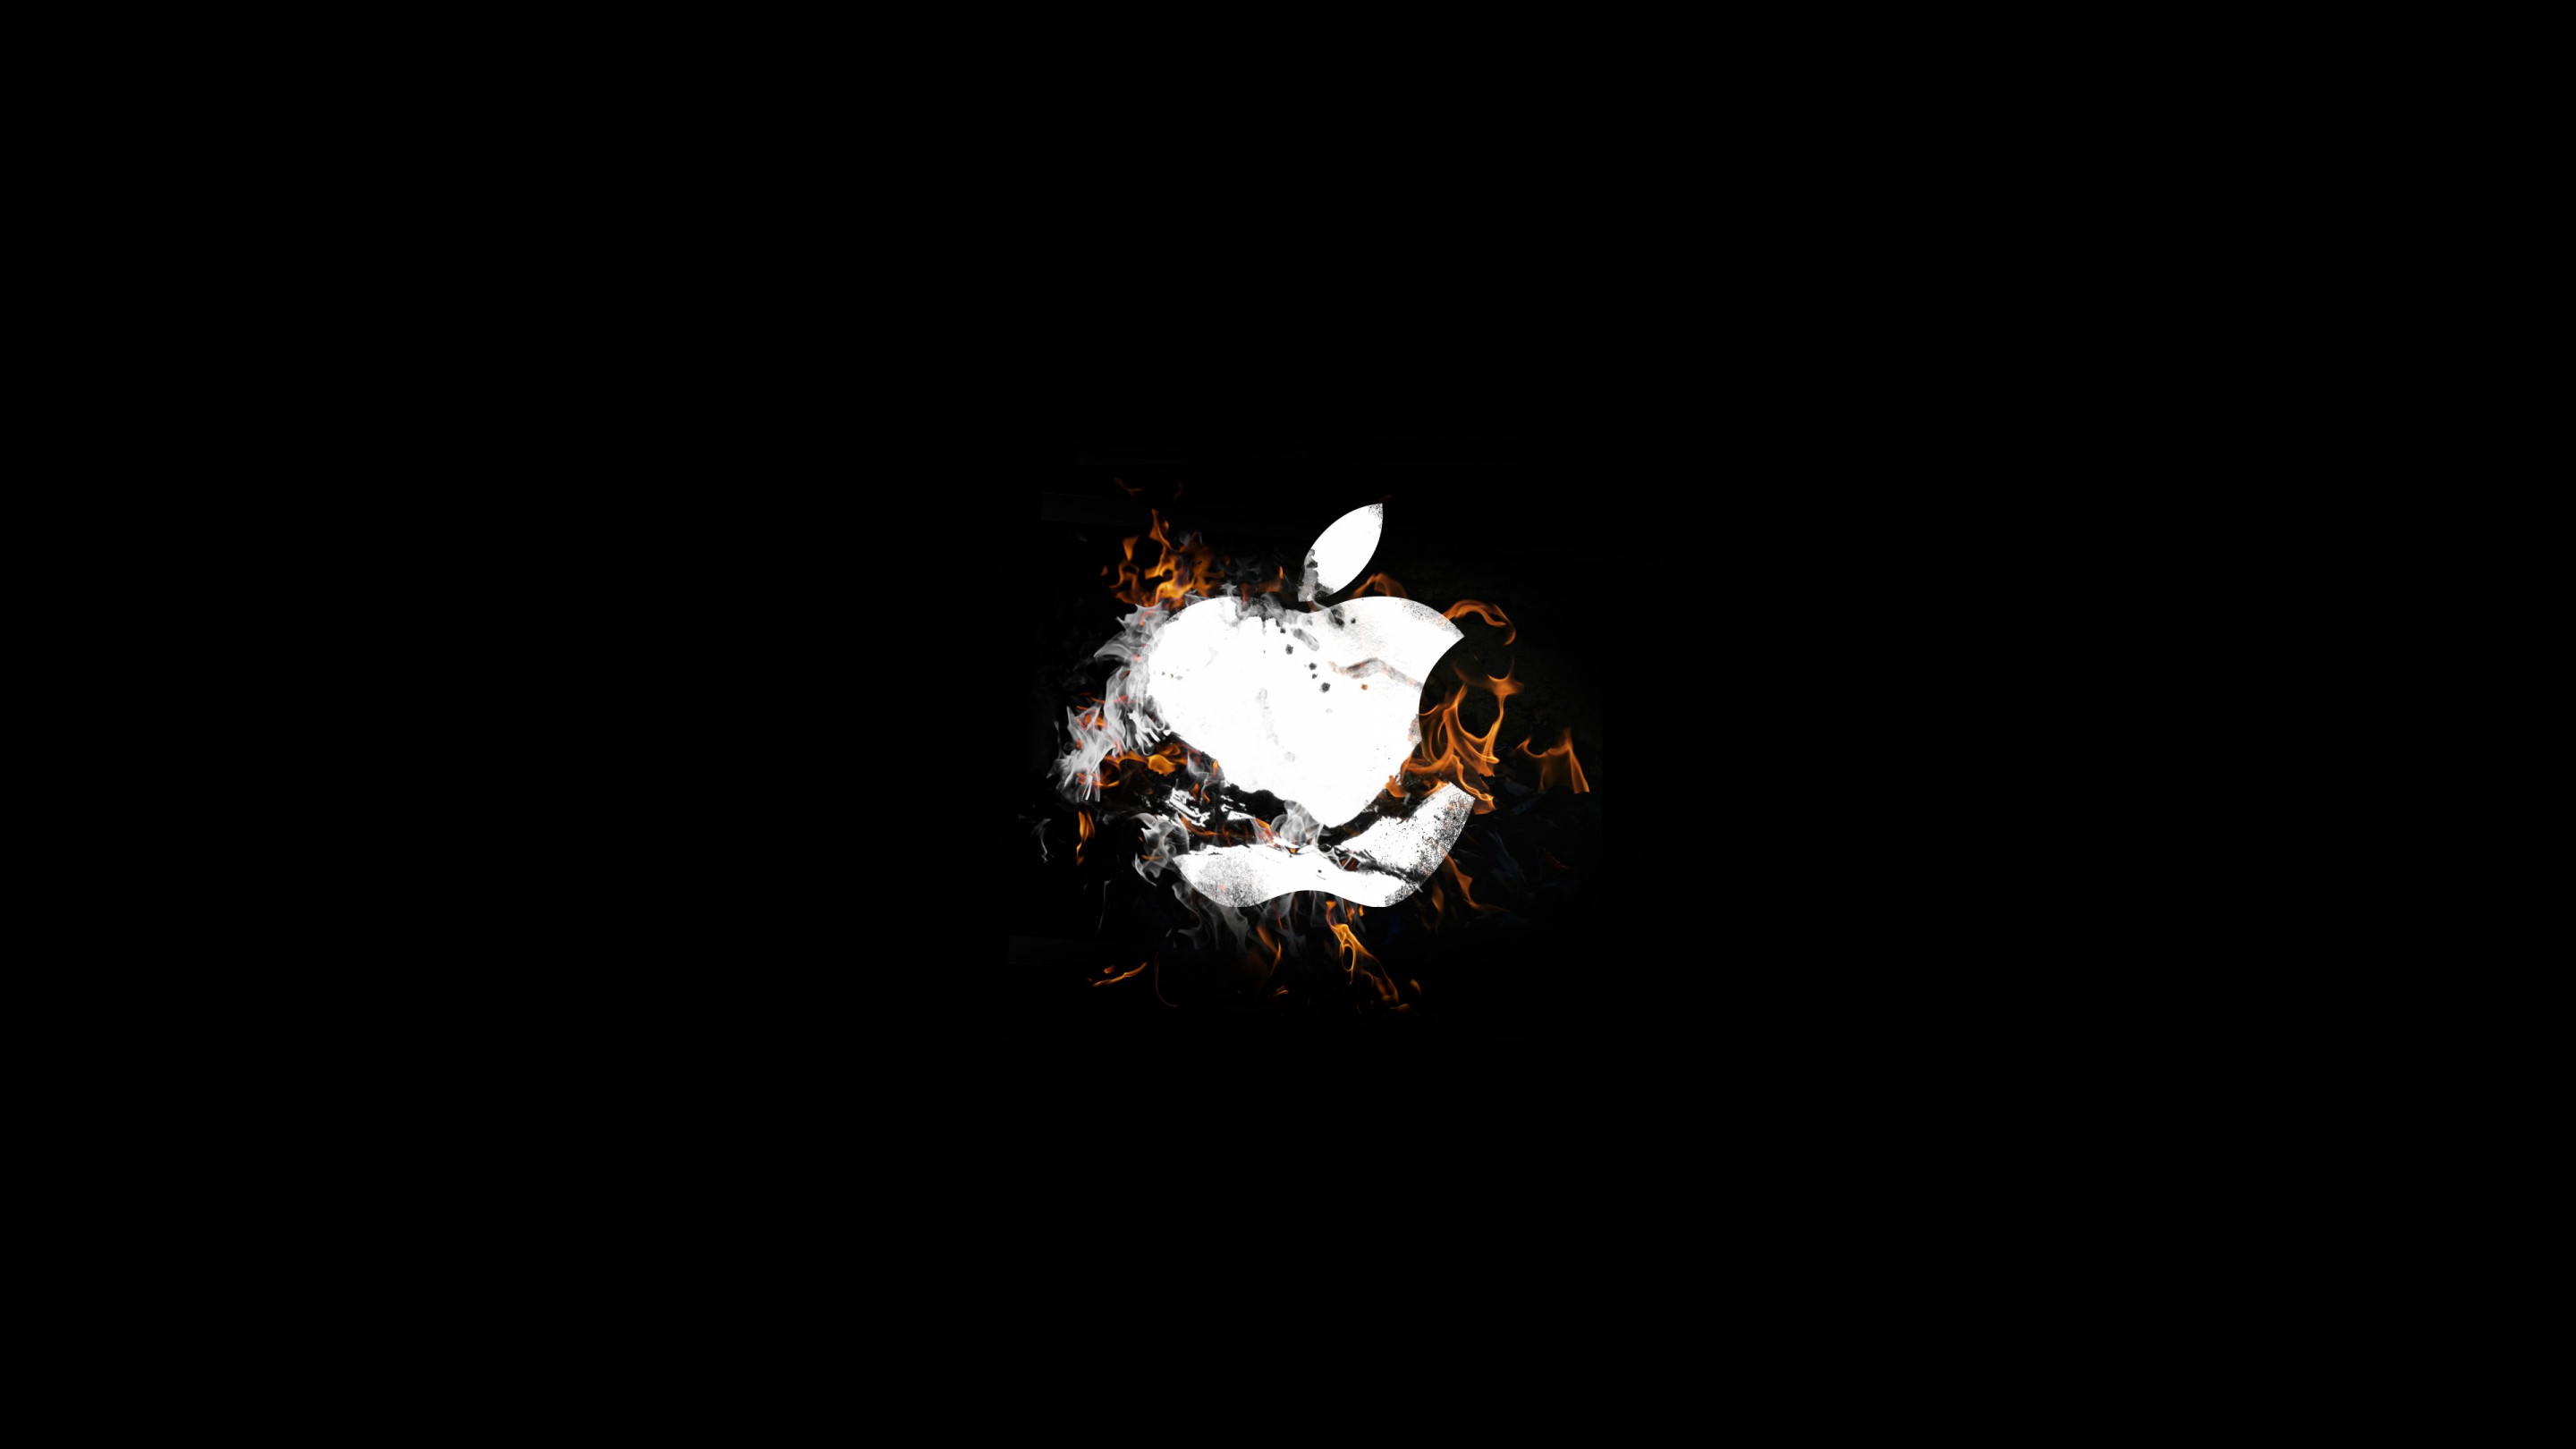 The Apple is on fire wallpaper 2880x1620